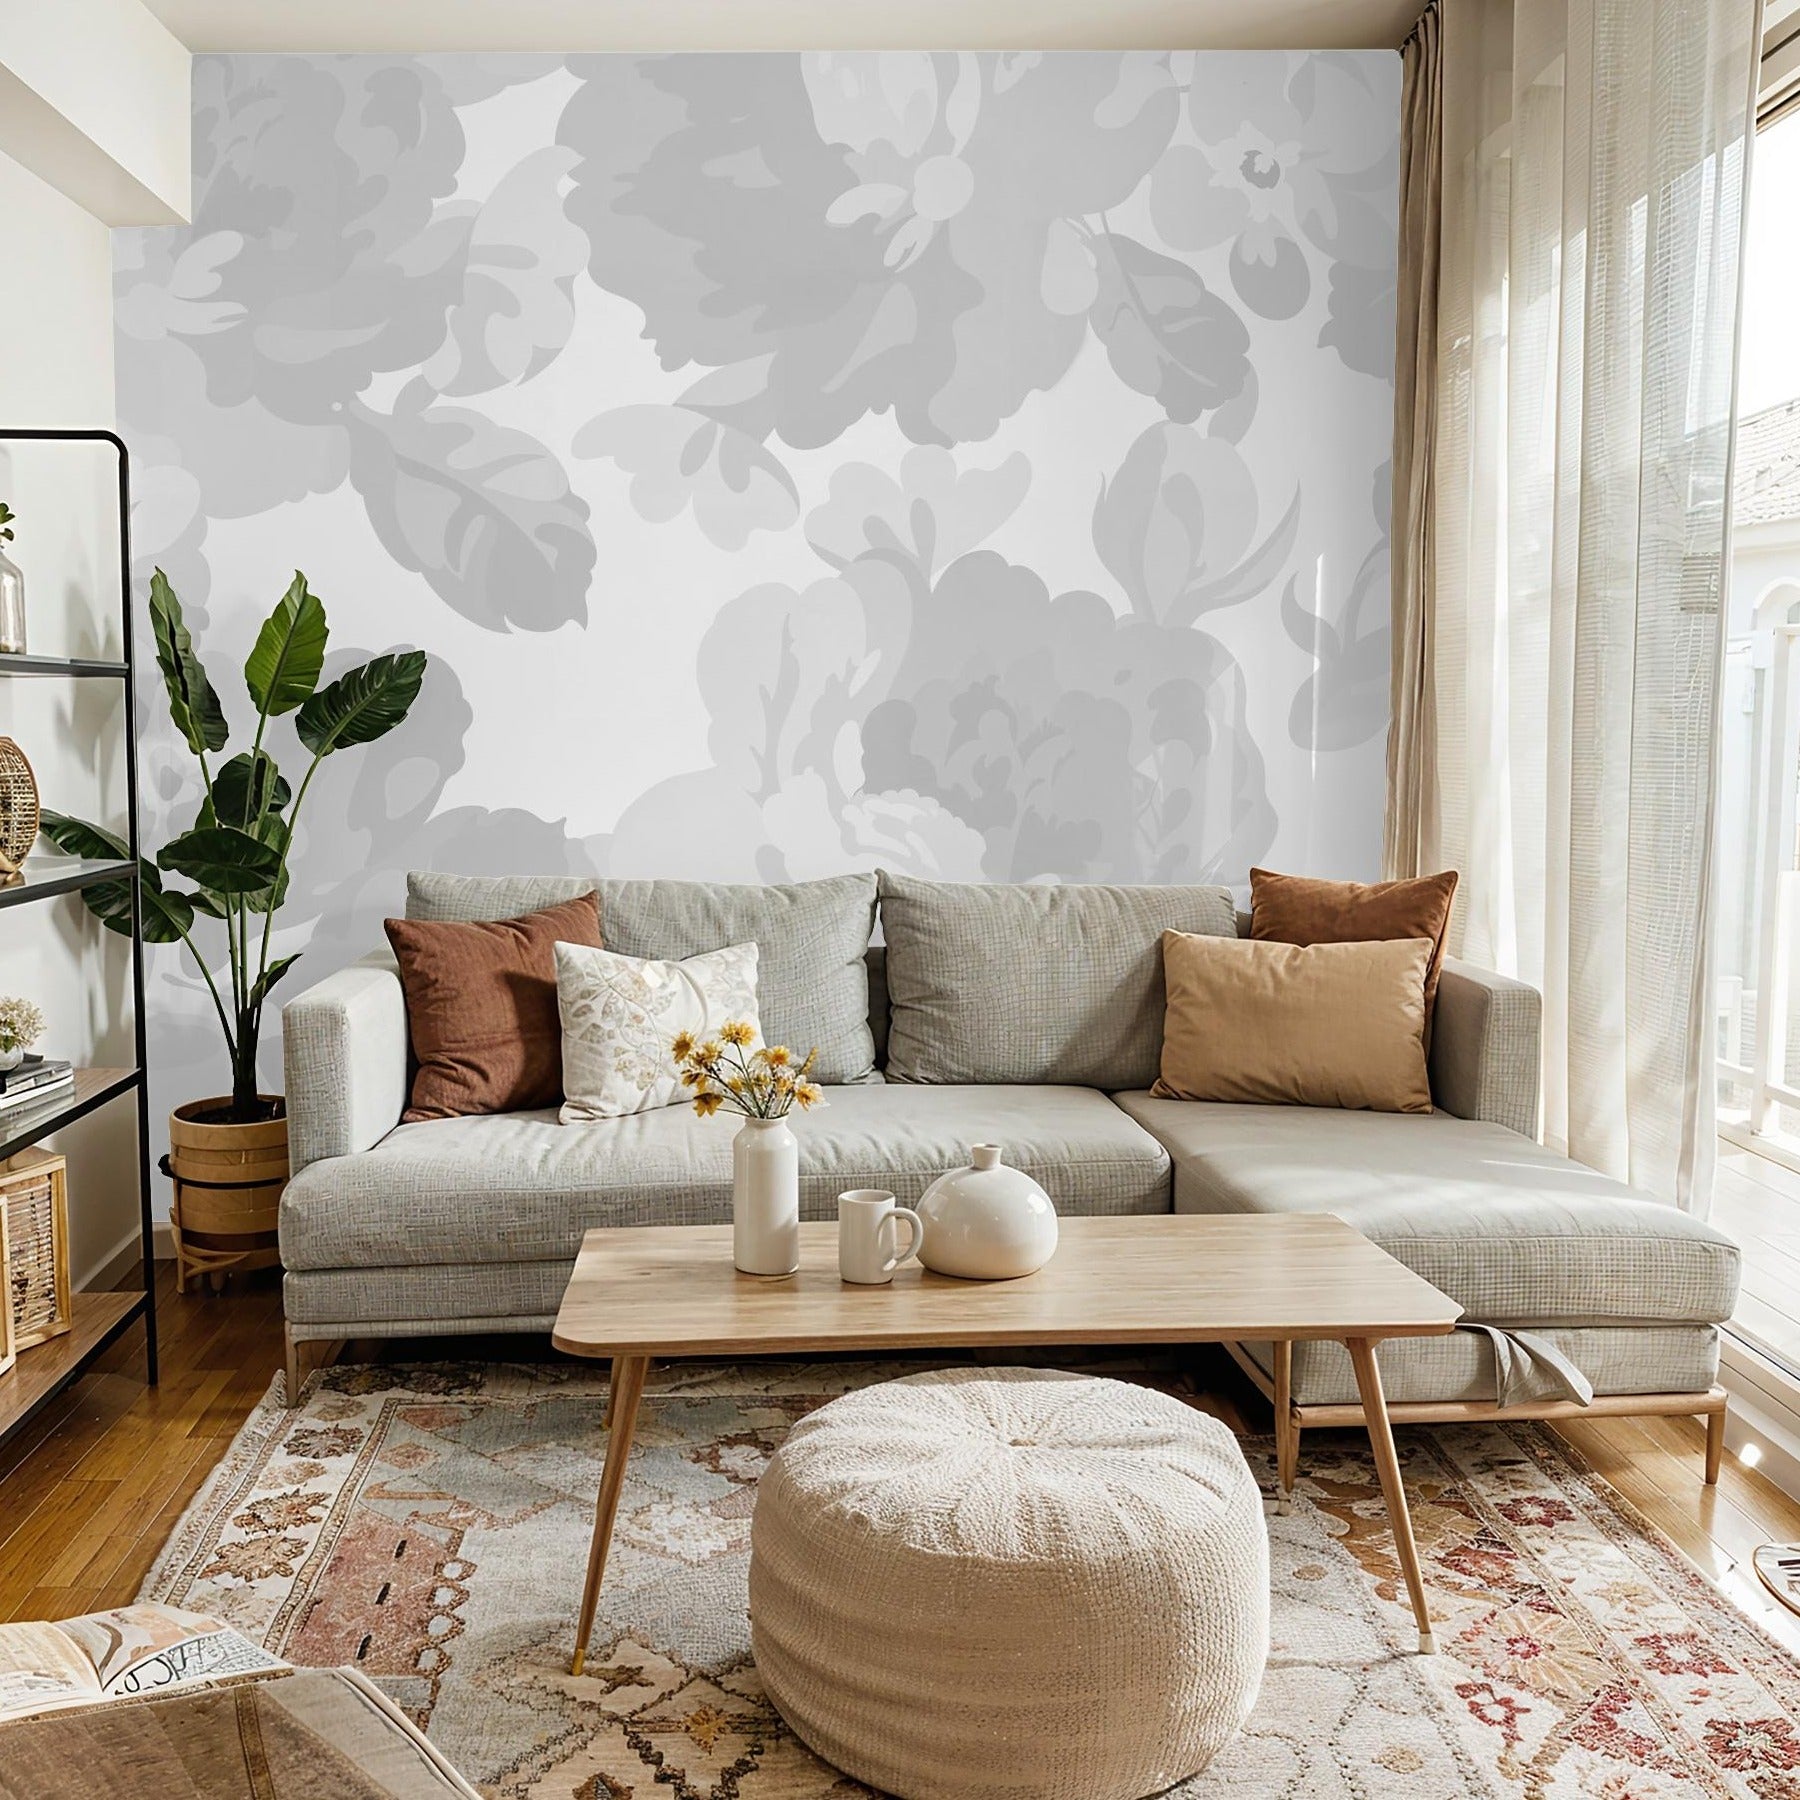 "Terra Bloom (Gray) Wallpaper by Wall Blush enhancing a modern living room decor with elegant design focus."